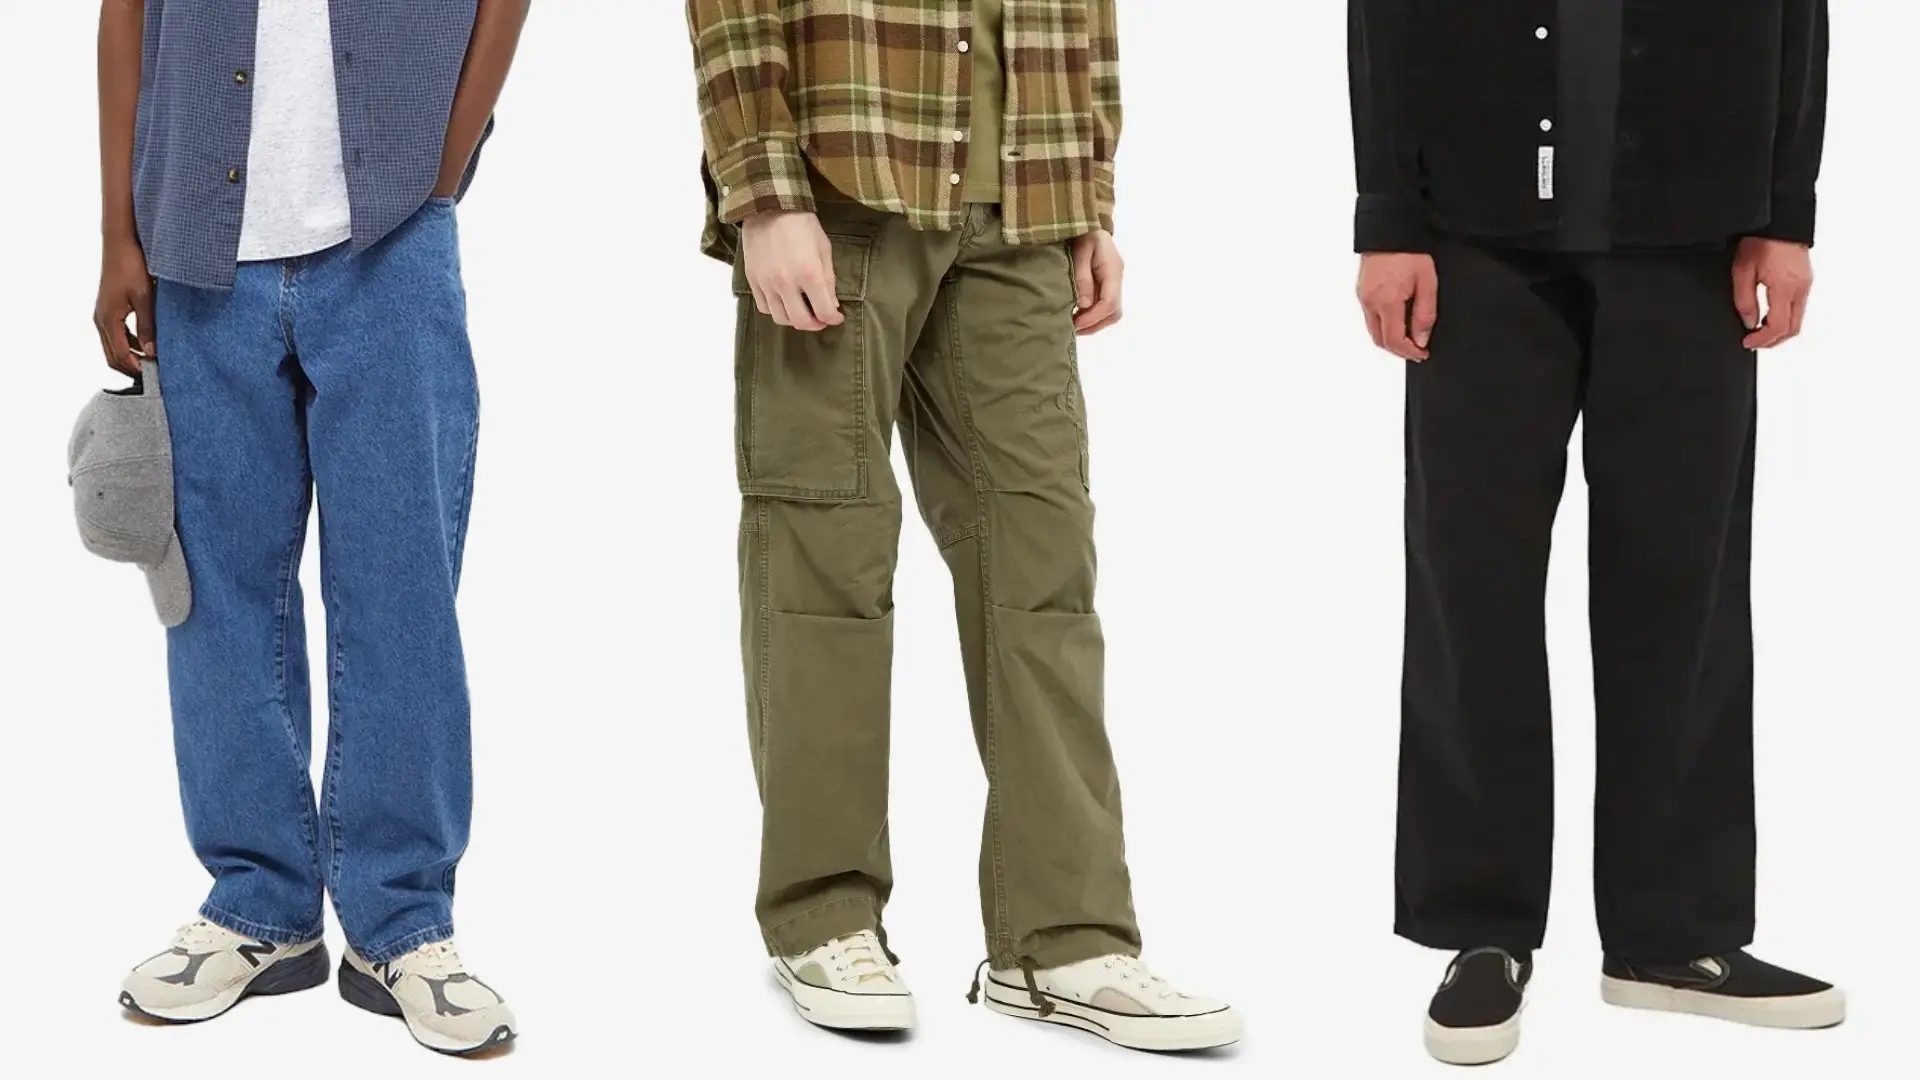 LIXINGHEITANG Men's Pants Autumn Winter Chinese Style Casual Harlan Wide Leg  Corduroy Trousers Plus Size s1 Black XS at Amazon Men's Clothing store